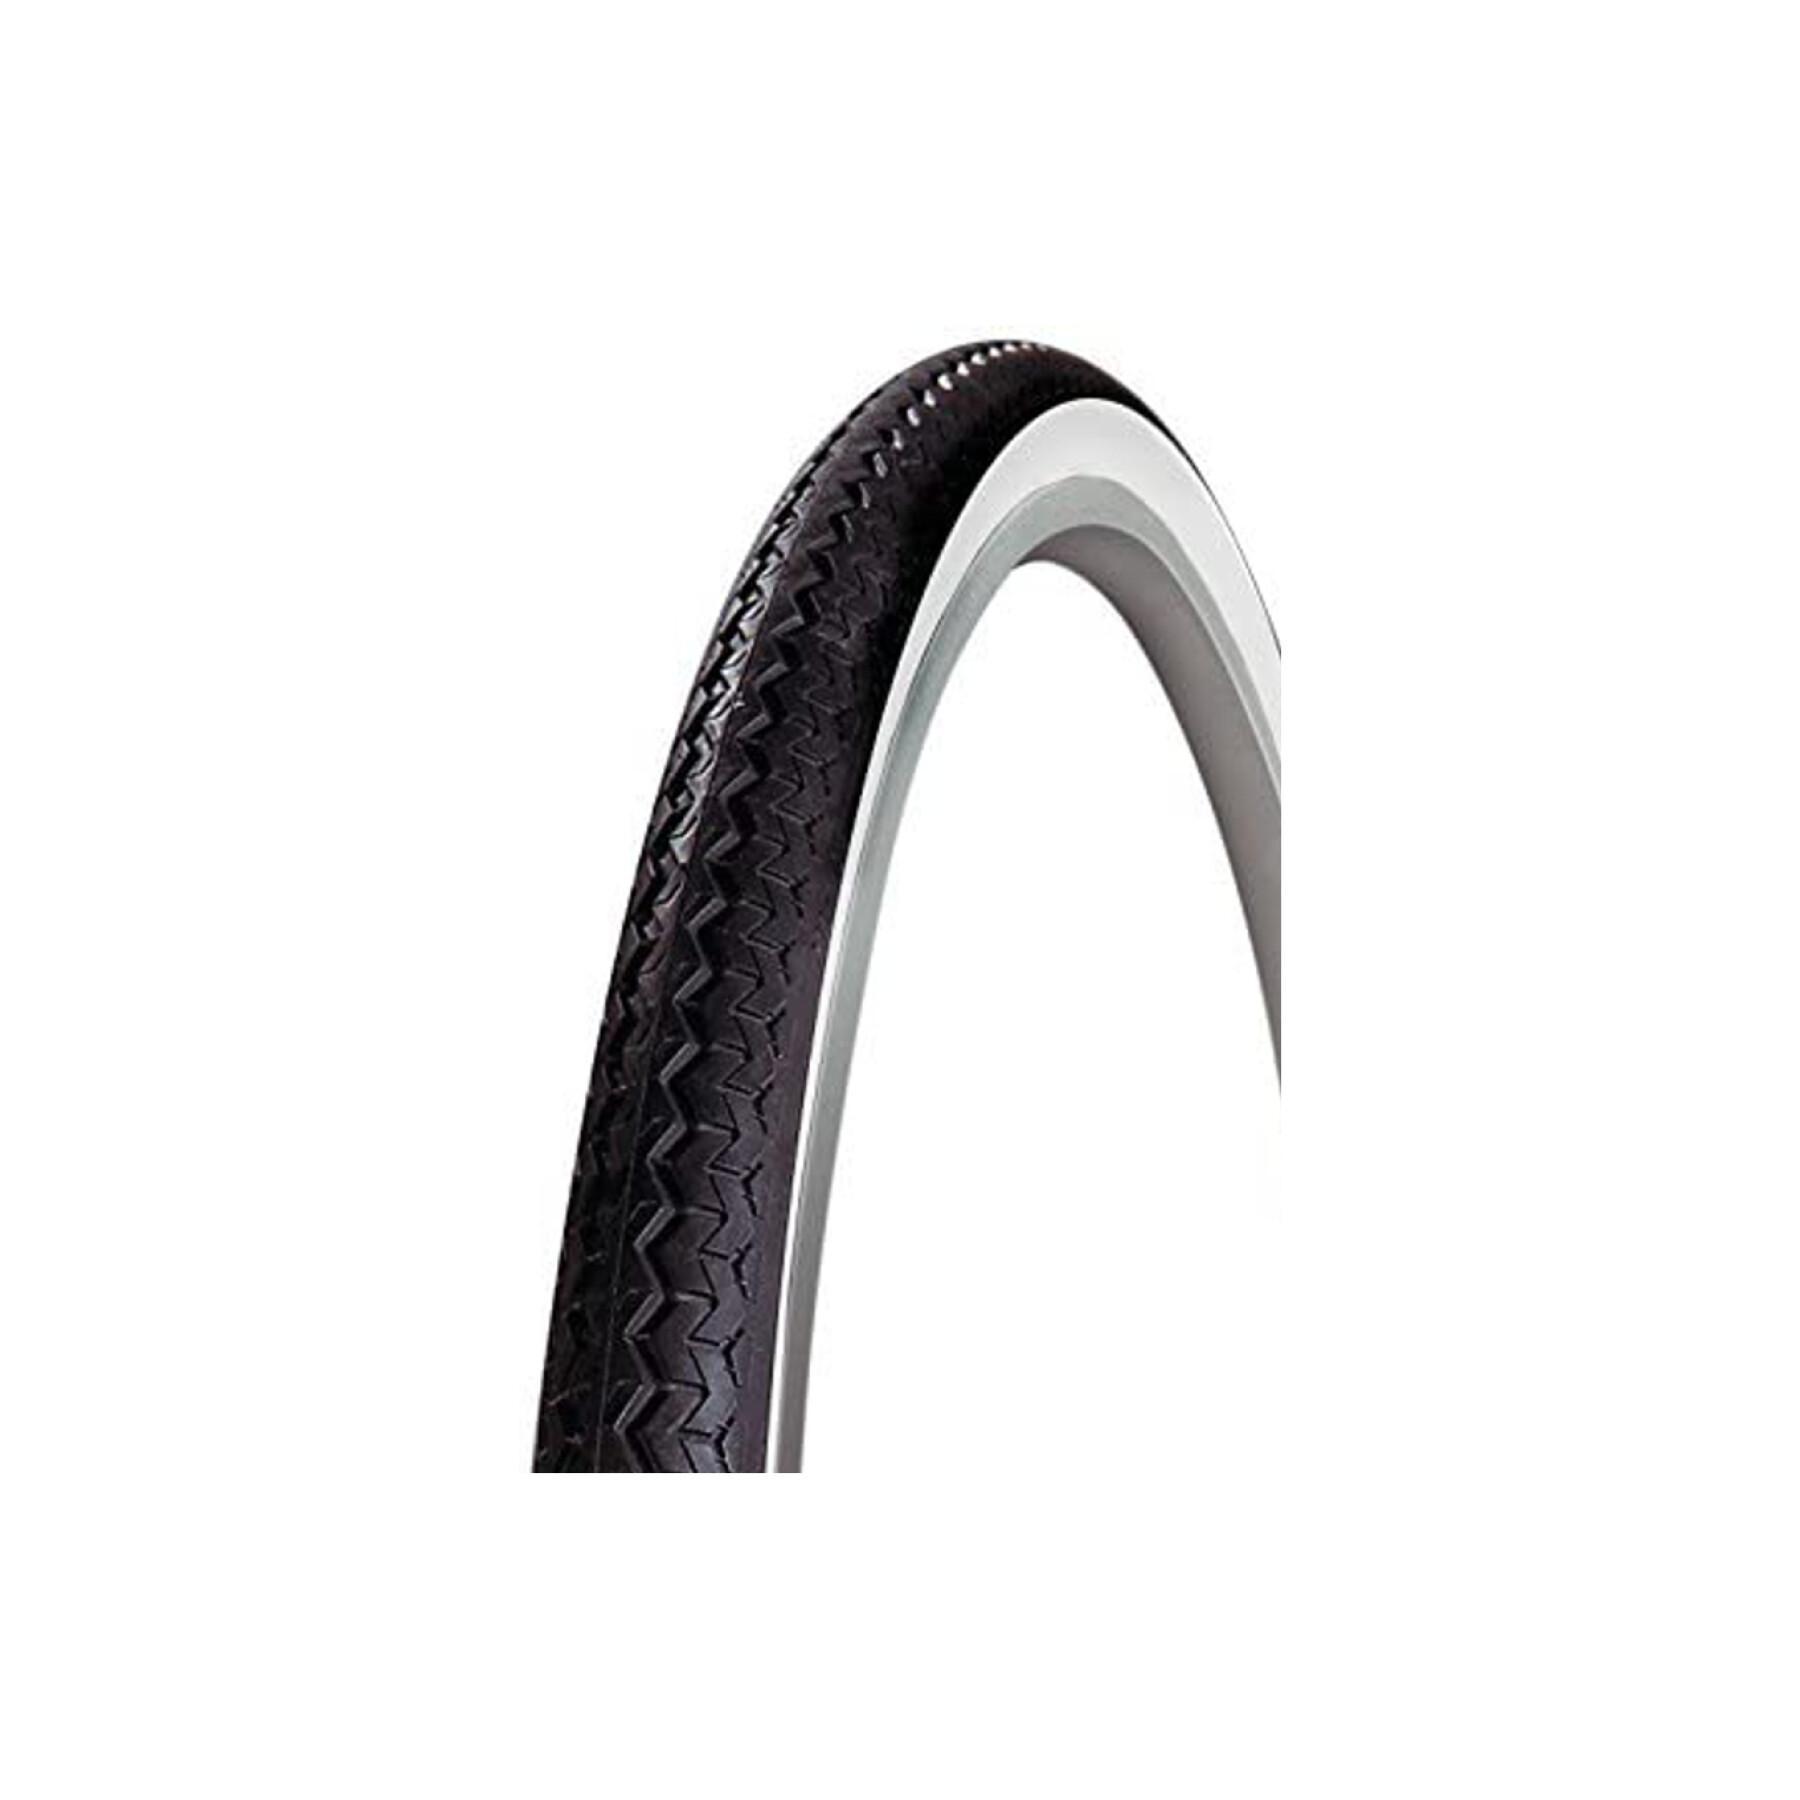 Rigid tire Michelin World Tour Acces Line 650 x 35C 35-590